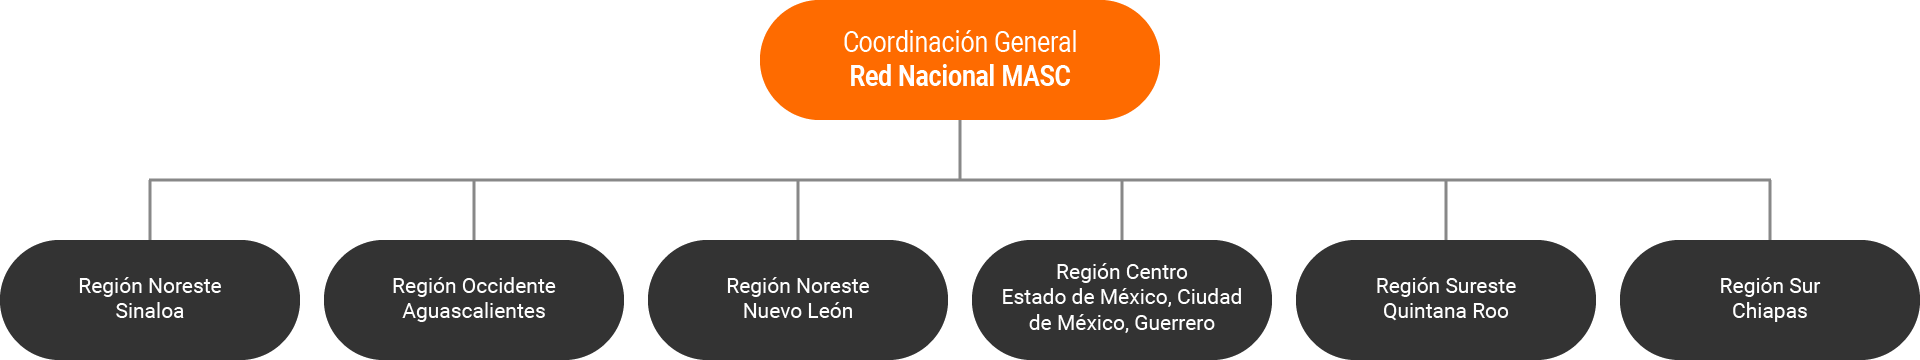 Organigrama Red Nacional MASC